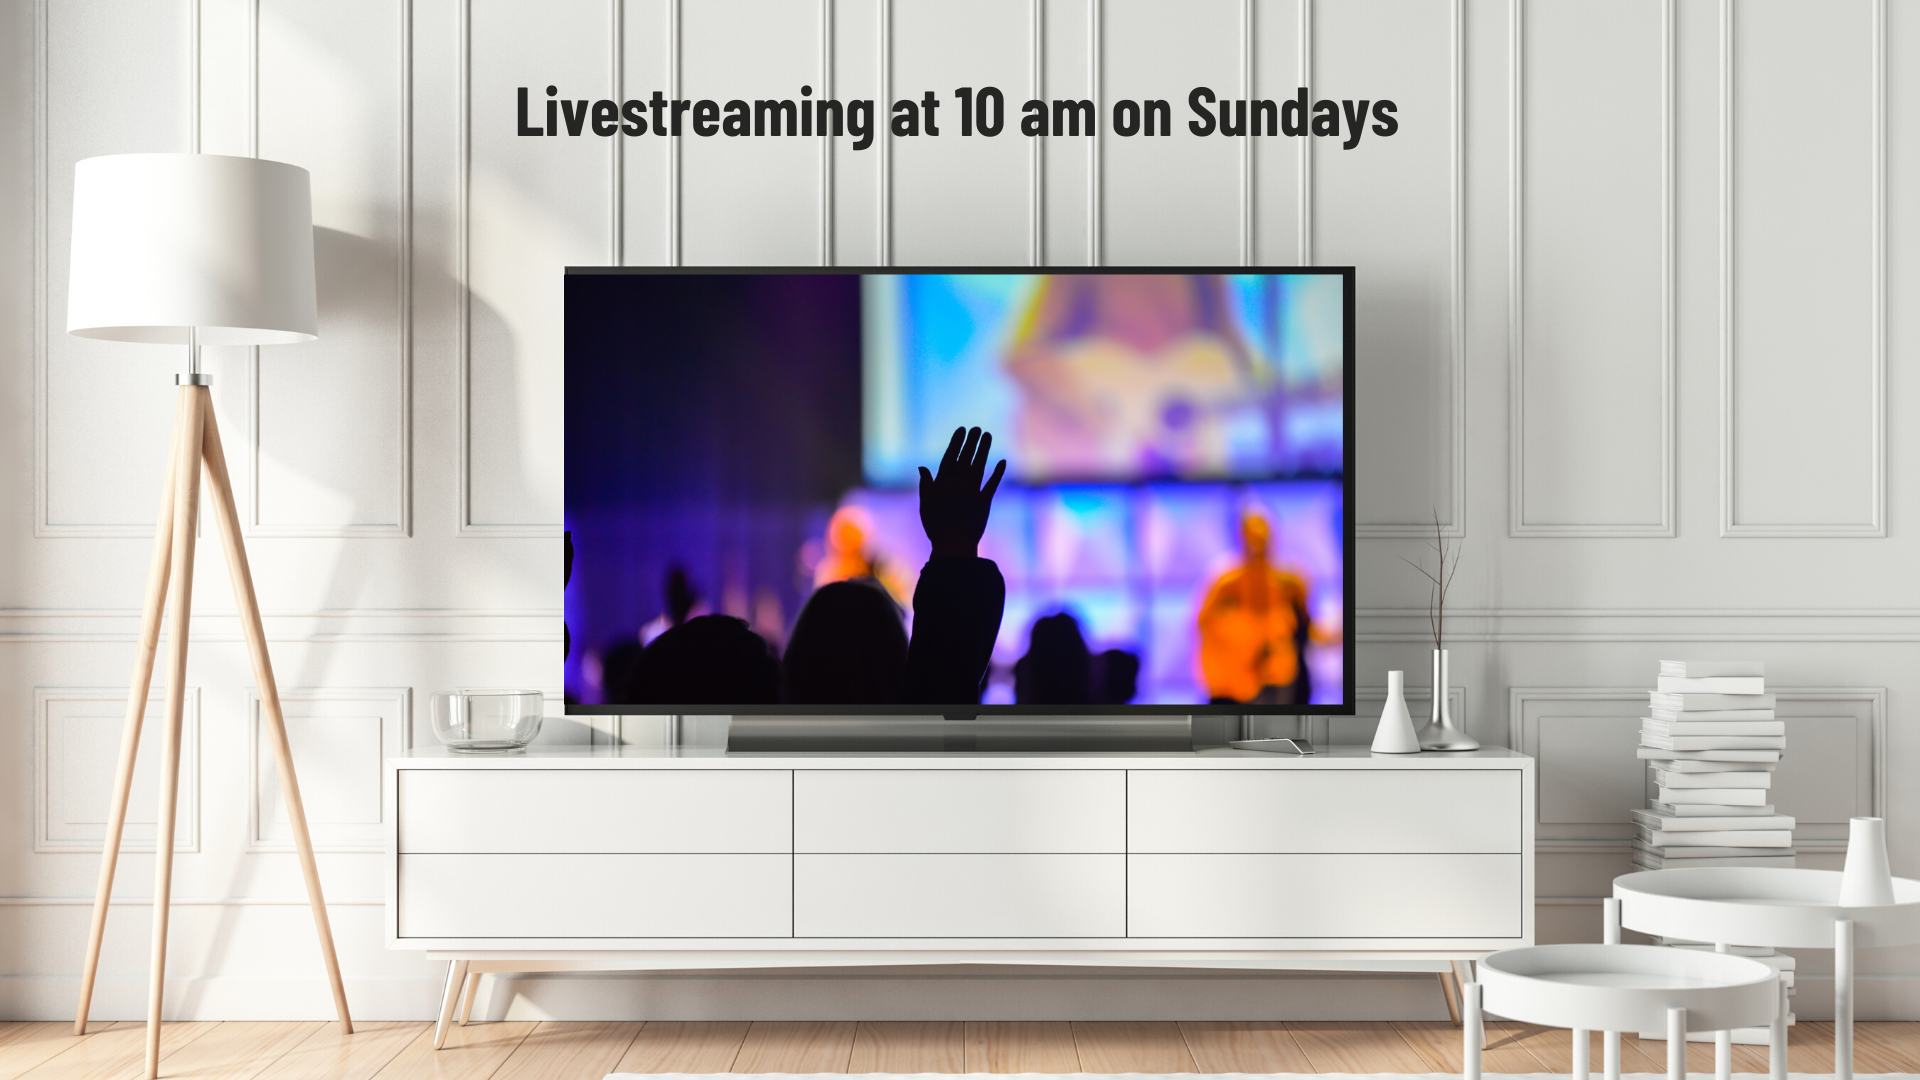 Livestreaming 10:30 on Sundays